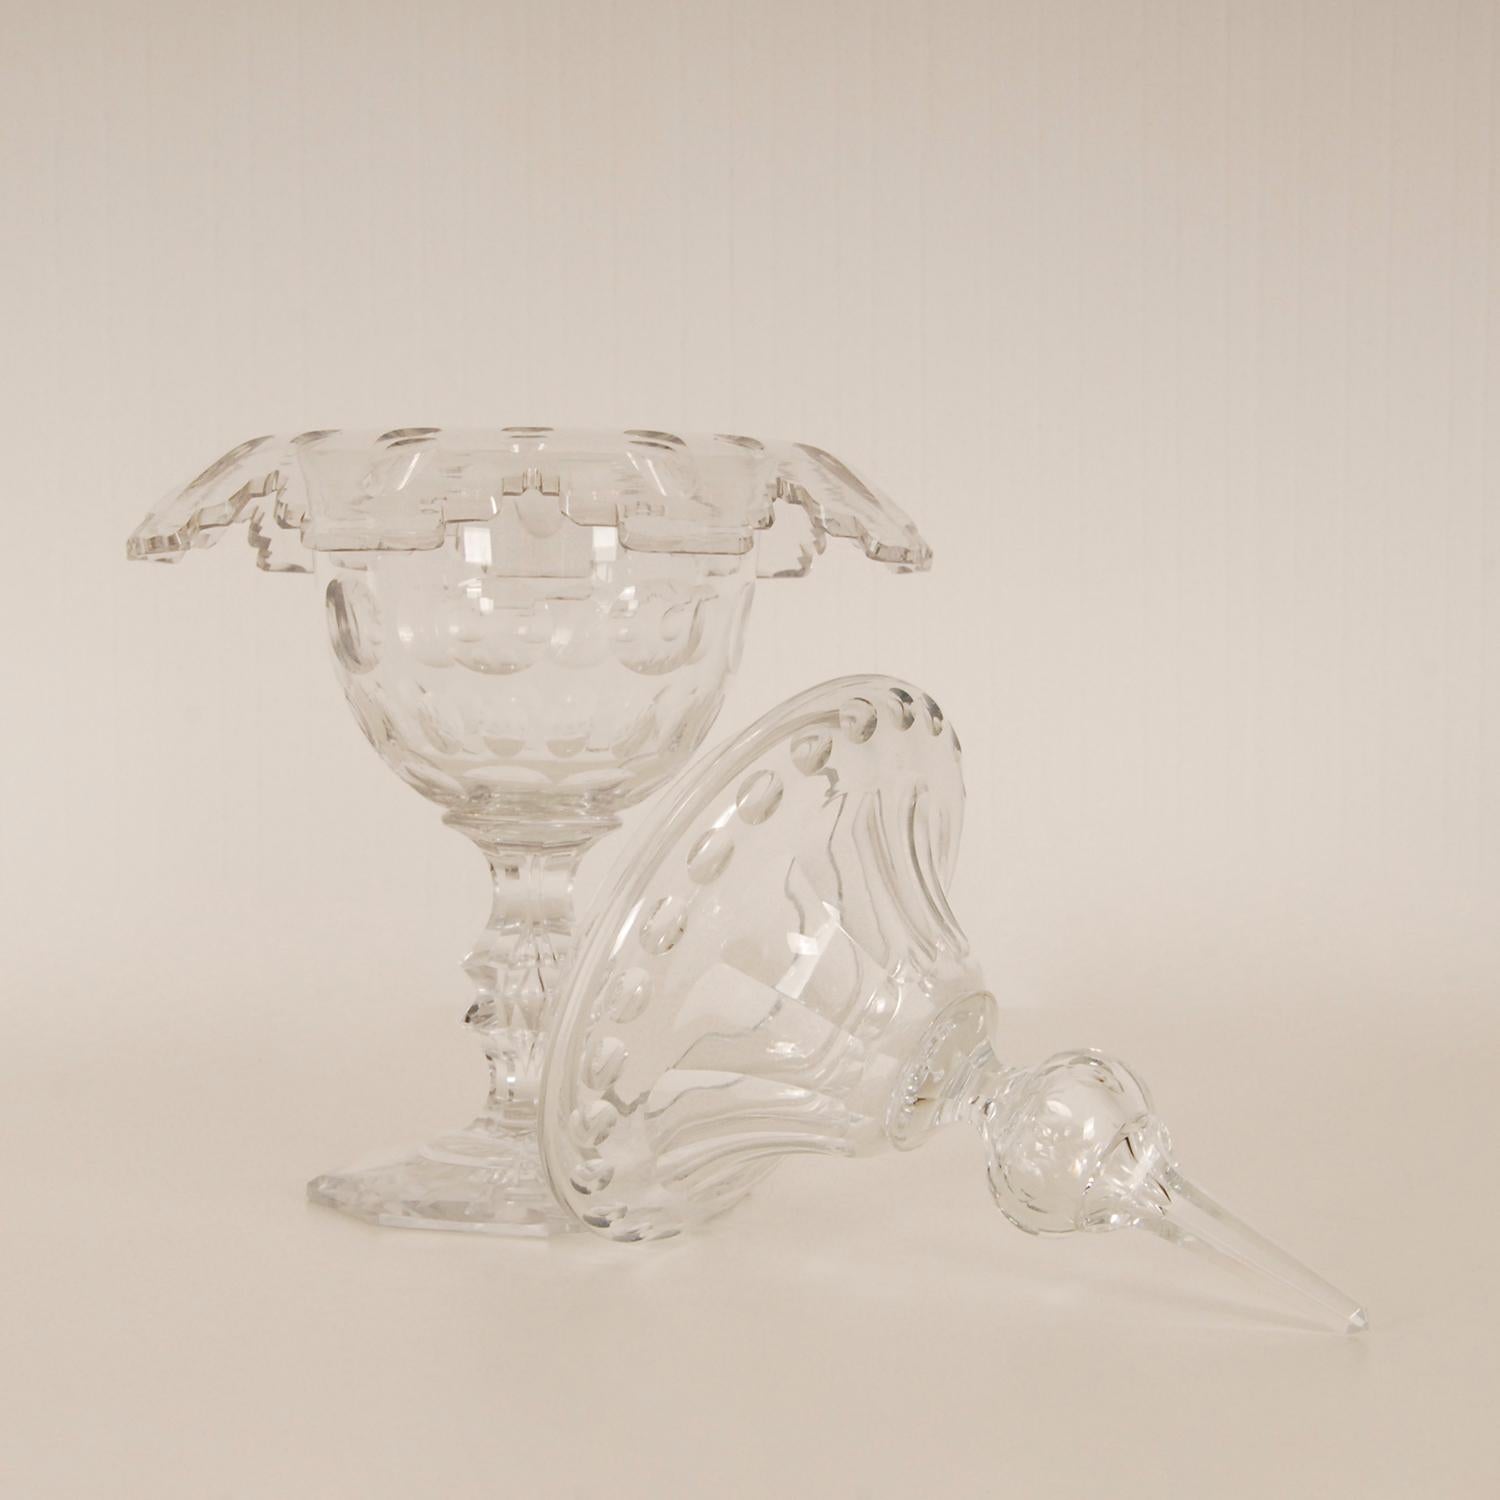 Cut Crystal Coupe Ingwerglas Krug mit Fuß Drageoir Compotier mit Deckel 19. Jahrhundert  (Kristall) im Angebot